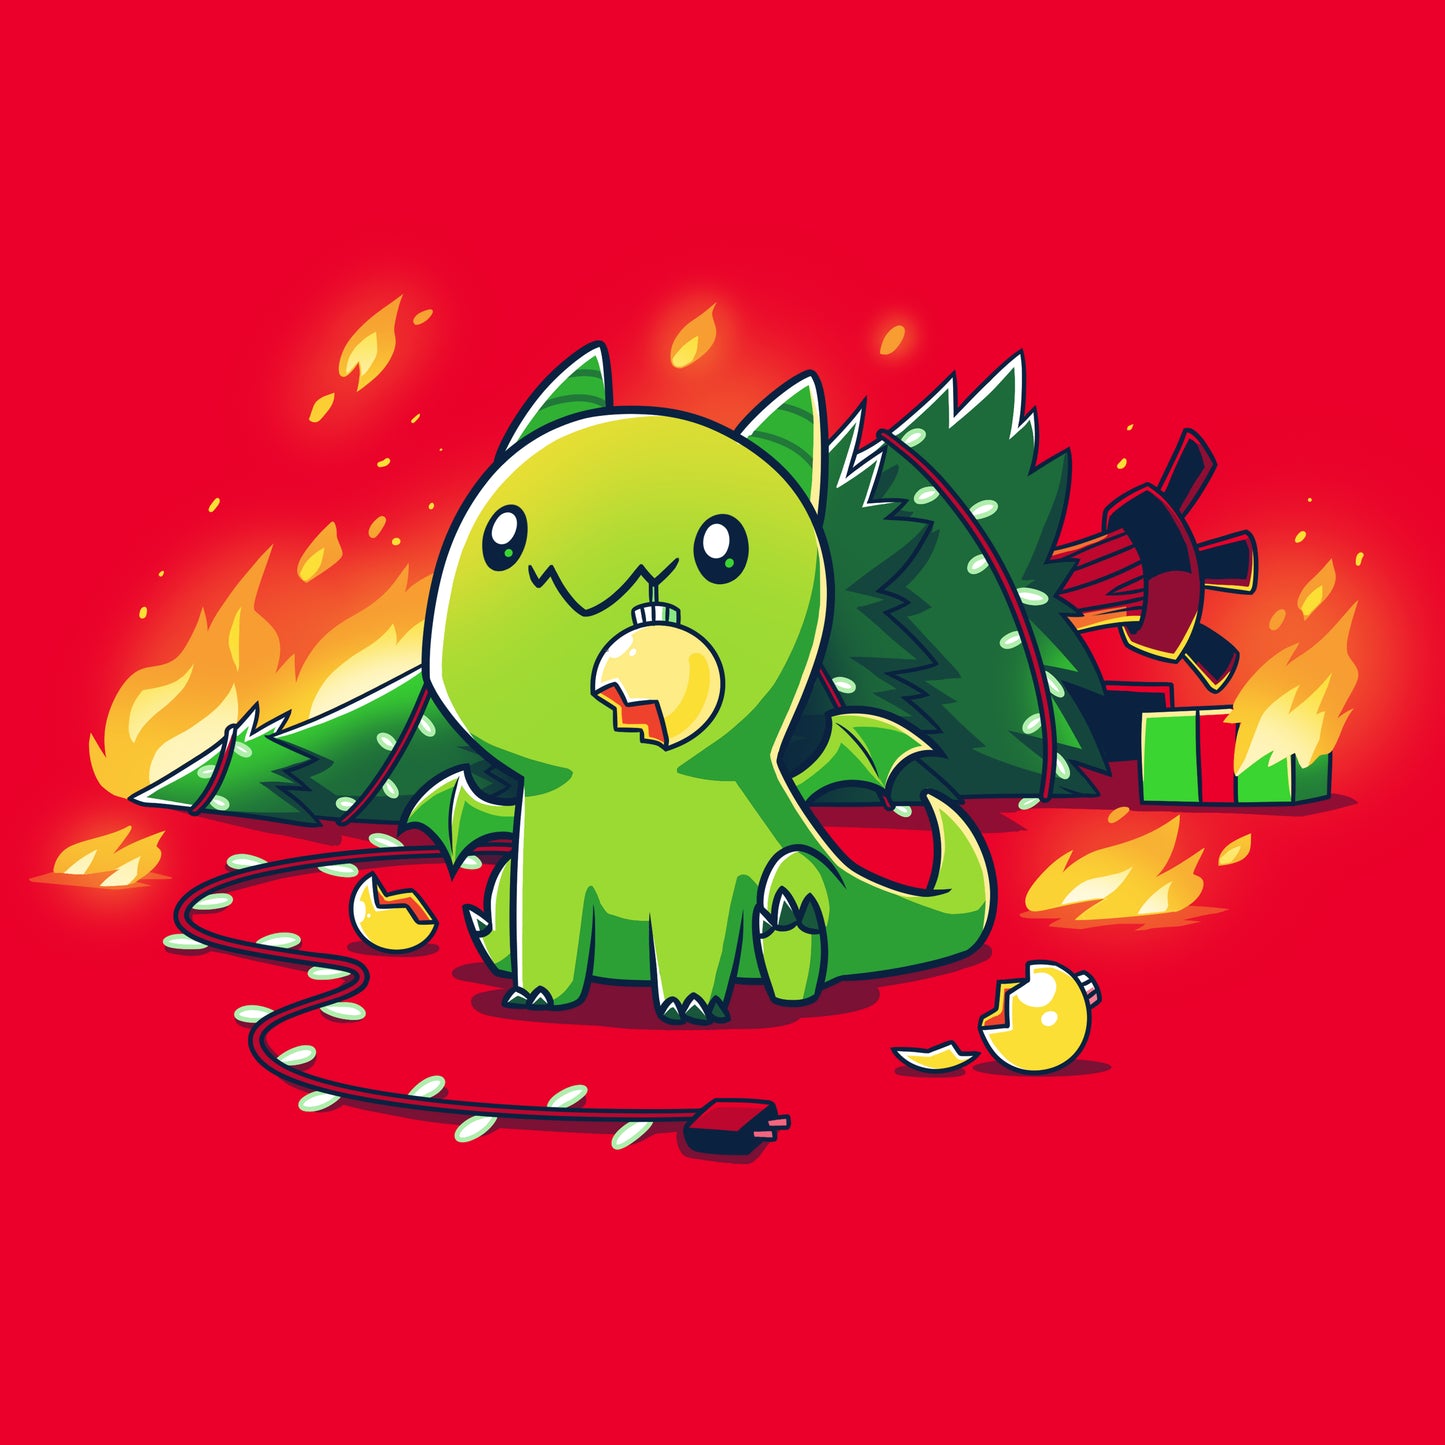 A Christmas Dragon sitting next to a Christmas tree wearing a TeeTurtle t-shirt.